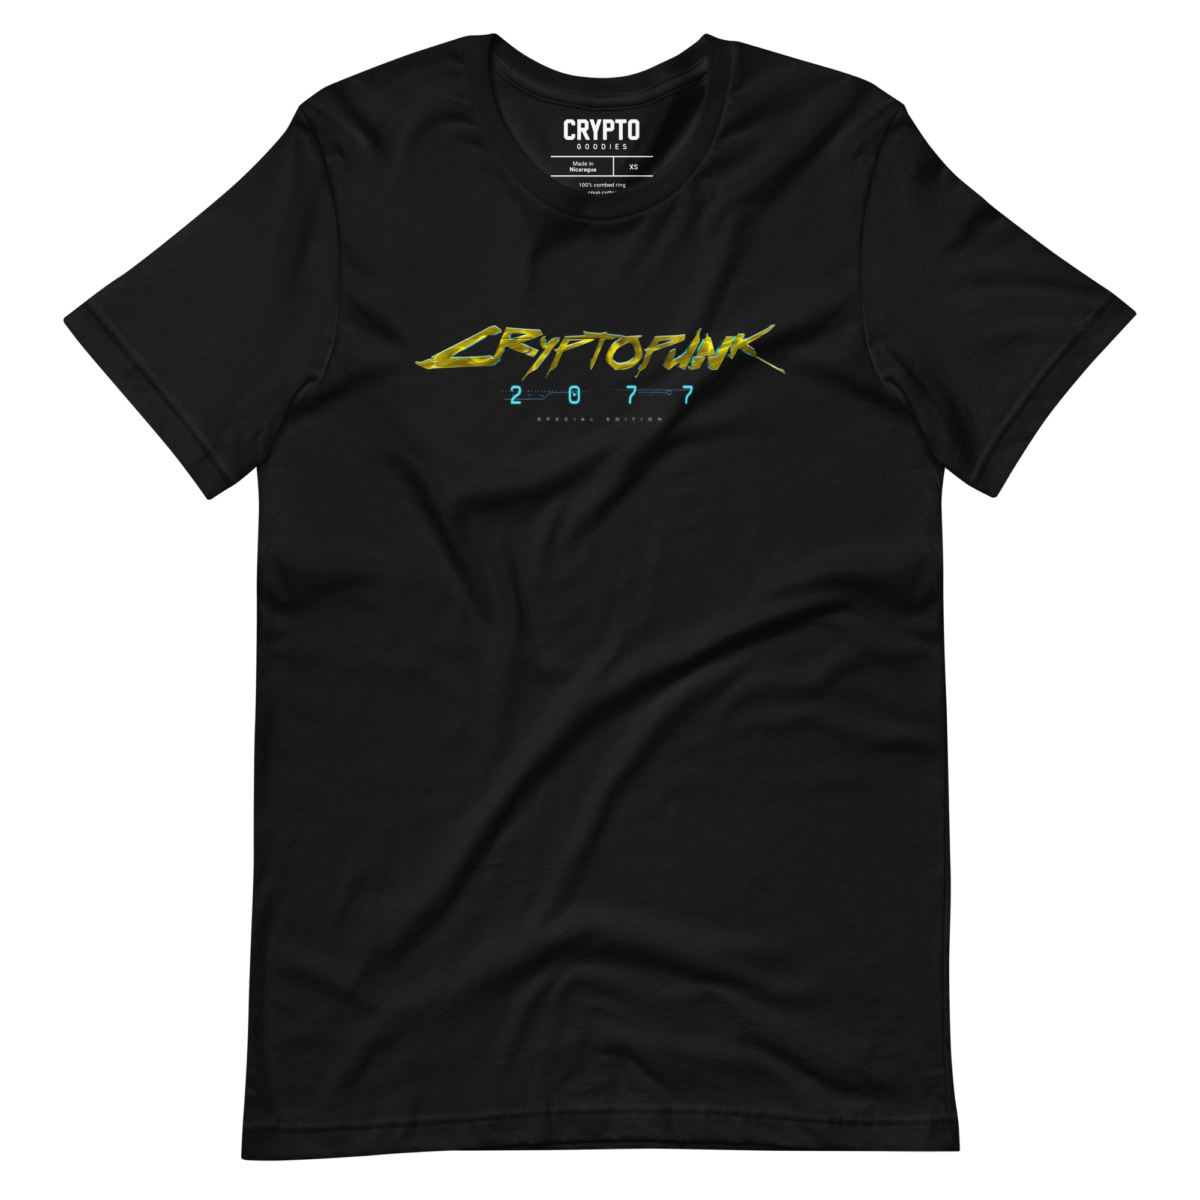 unisex staple t shirt black front 63912840c6cc1 - Cryptopunk 2077 T-Shirt